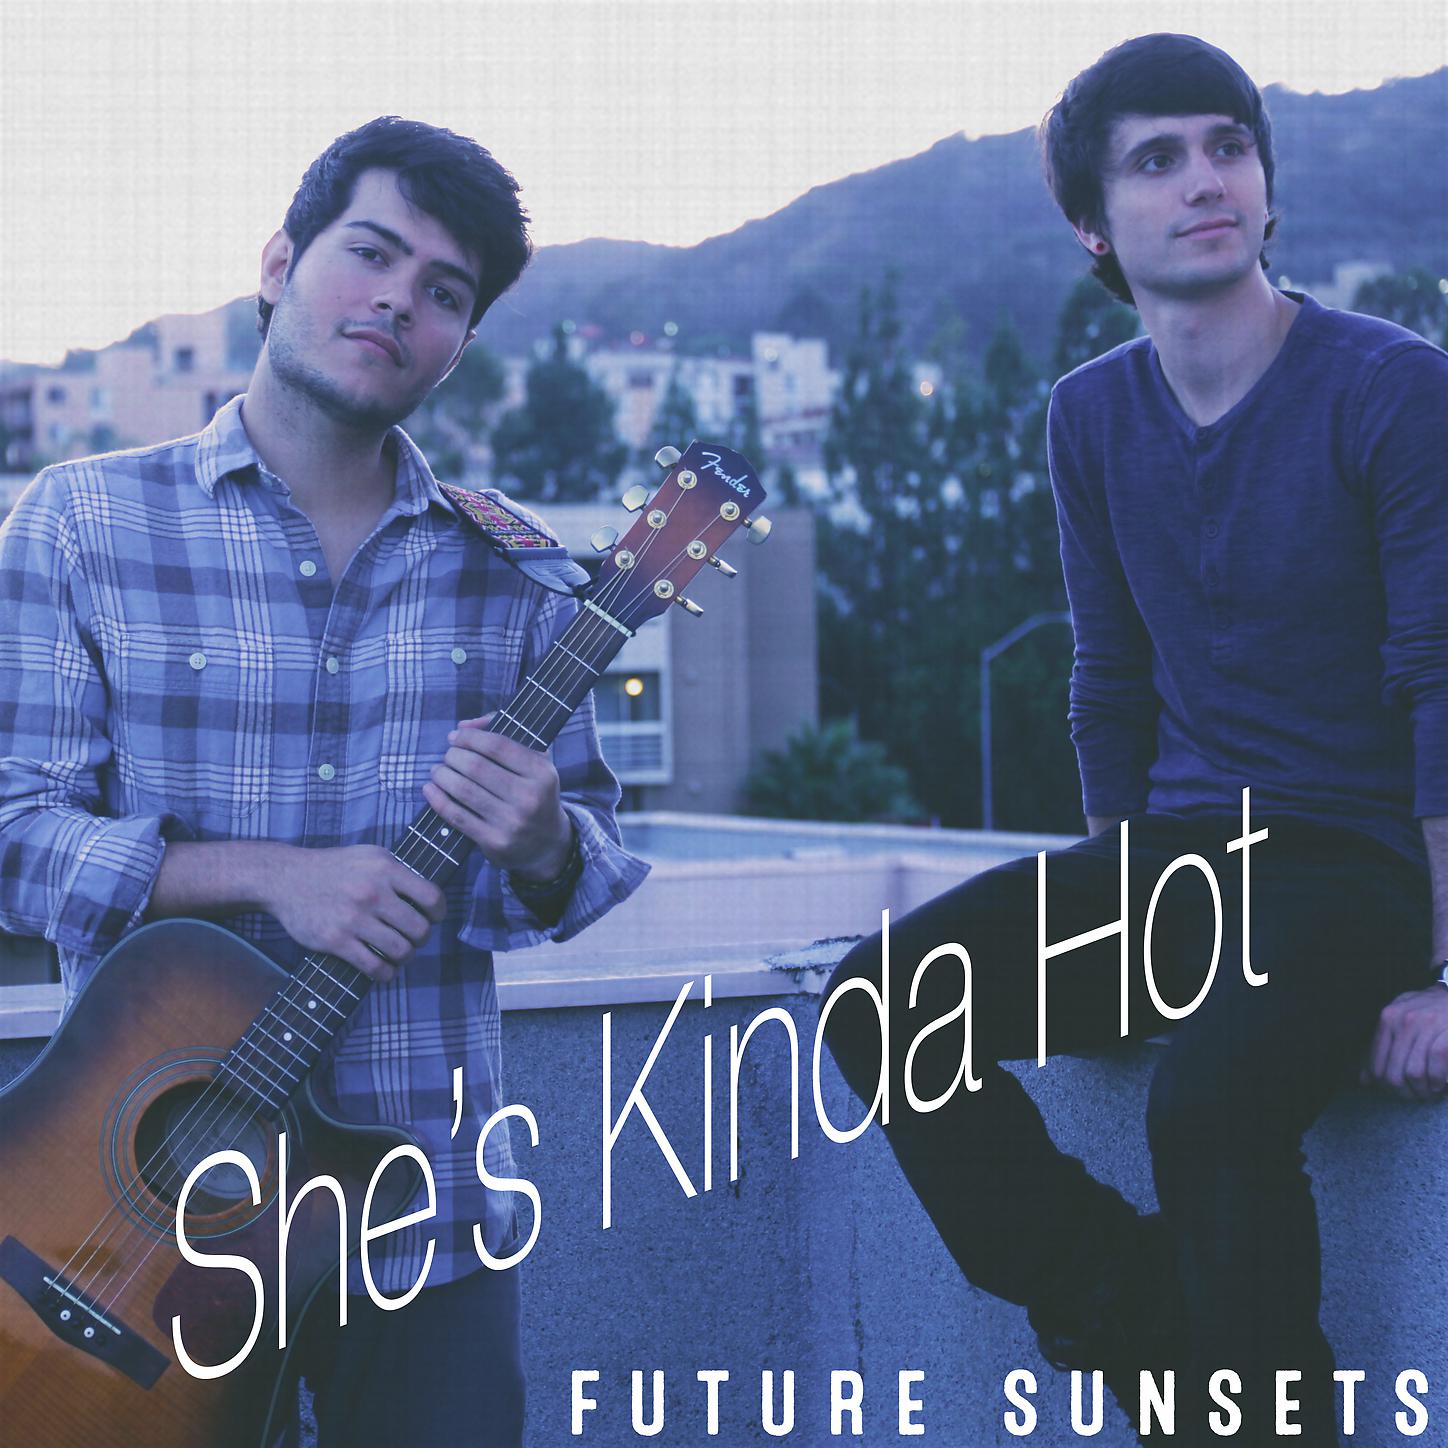 Будущая минусовка. Future Sunsets группа. Future Sunsets. "Future Sunsets" && ( исполнитель | группа | музыка | Music | Band | artist ) && (фото | photo).